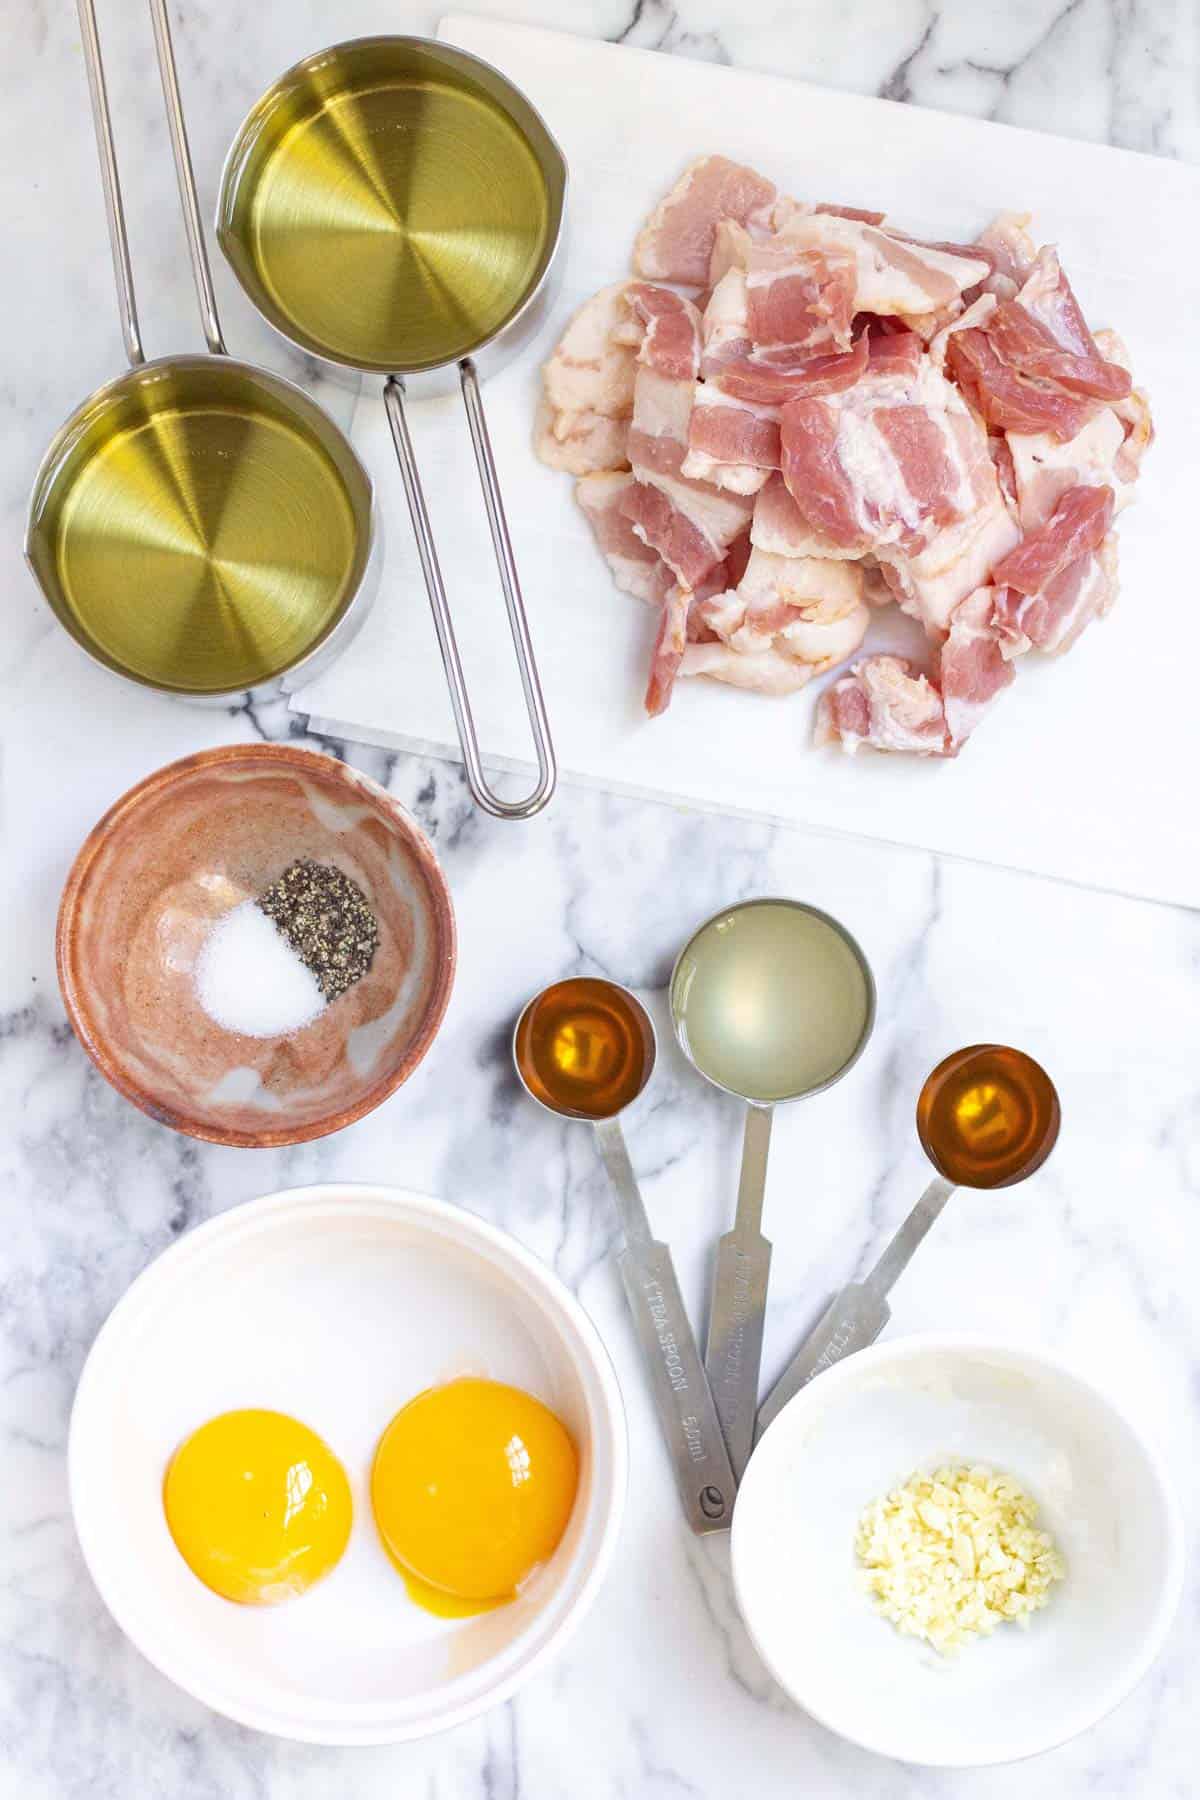 Bacon aioli ingredients: bacon, egg yolks, garlic, honey, lemon, salt, pepper, canola oil.